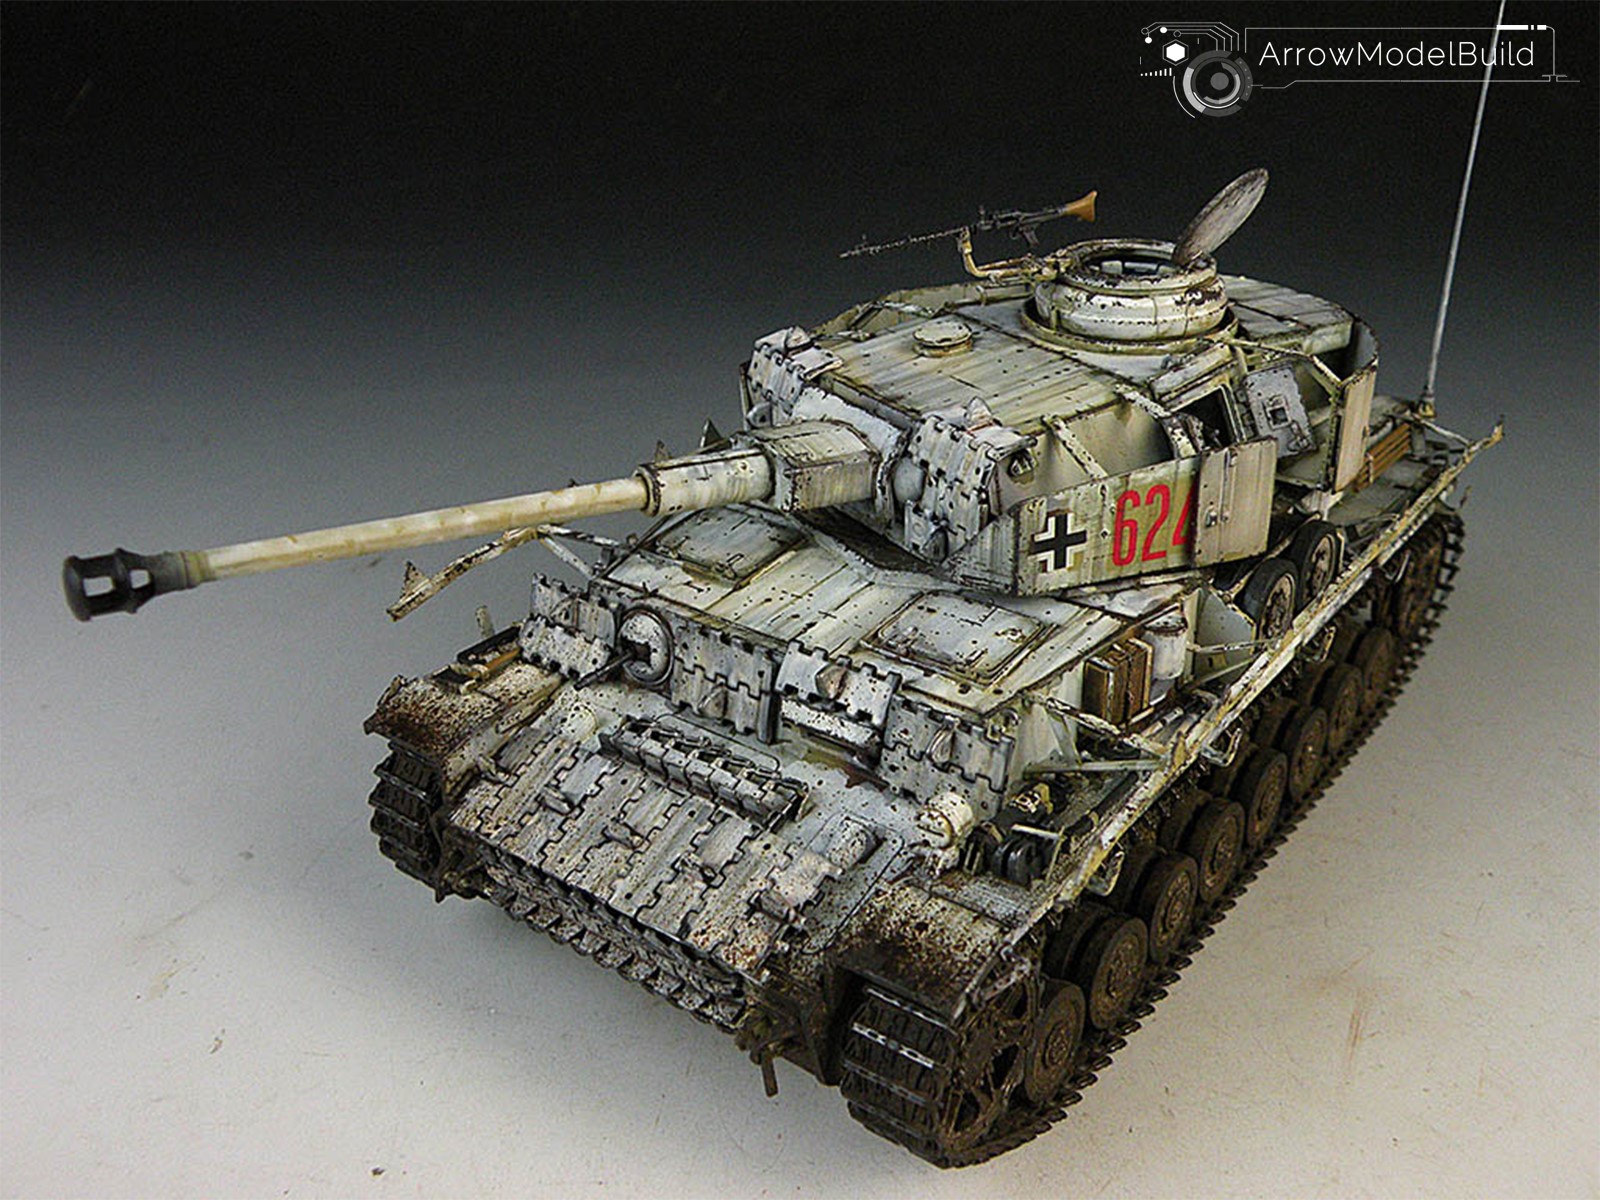 ArrowModelBuild - Figure and Robot, Gundam, Military, Vehicle, Arrow, Model  Build. ArrowModelBuild Panzer 38D Tank Built & Painted 1/35 Model Kit